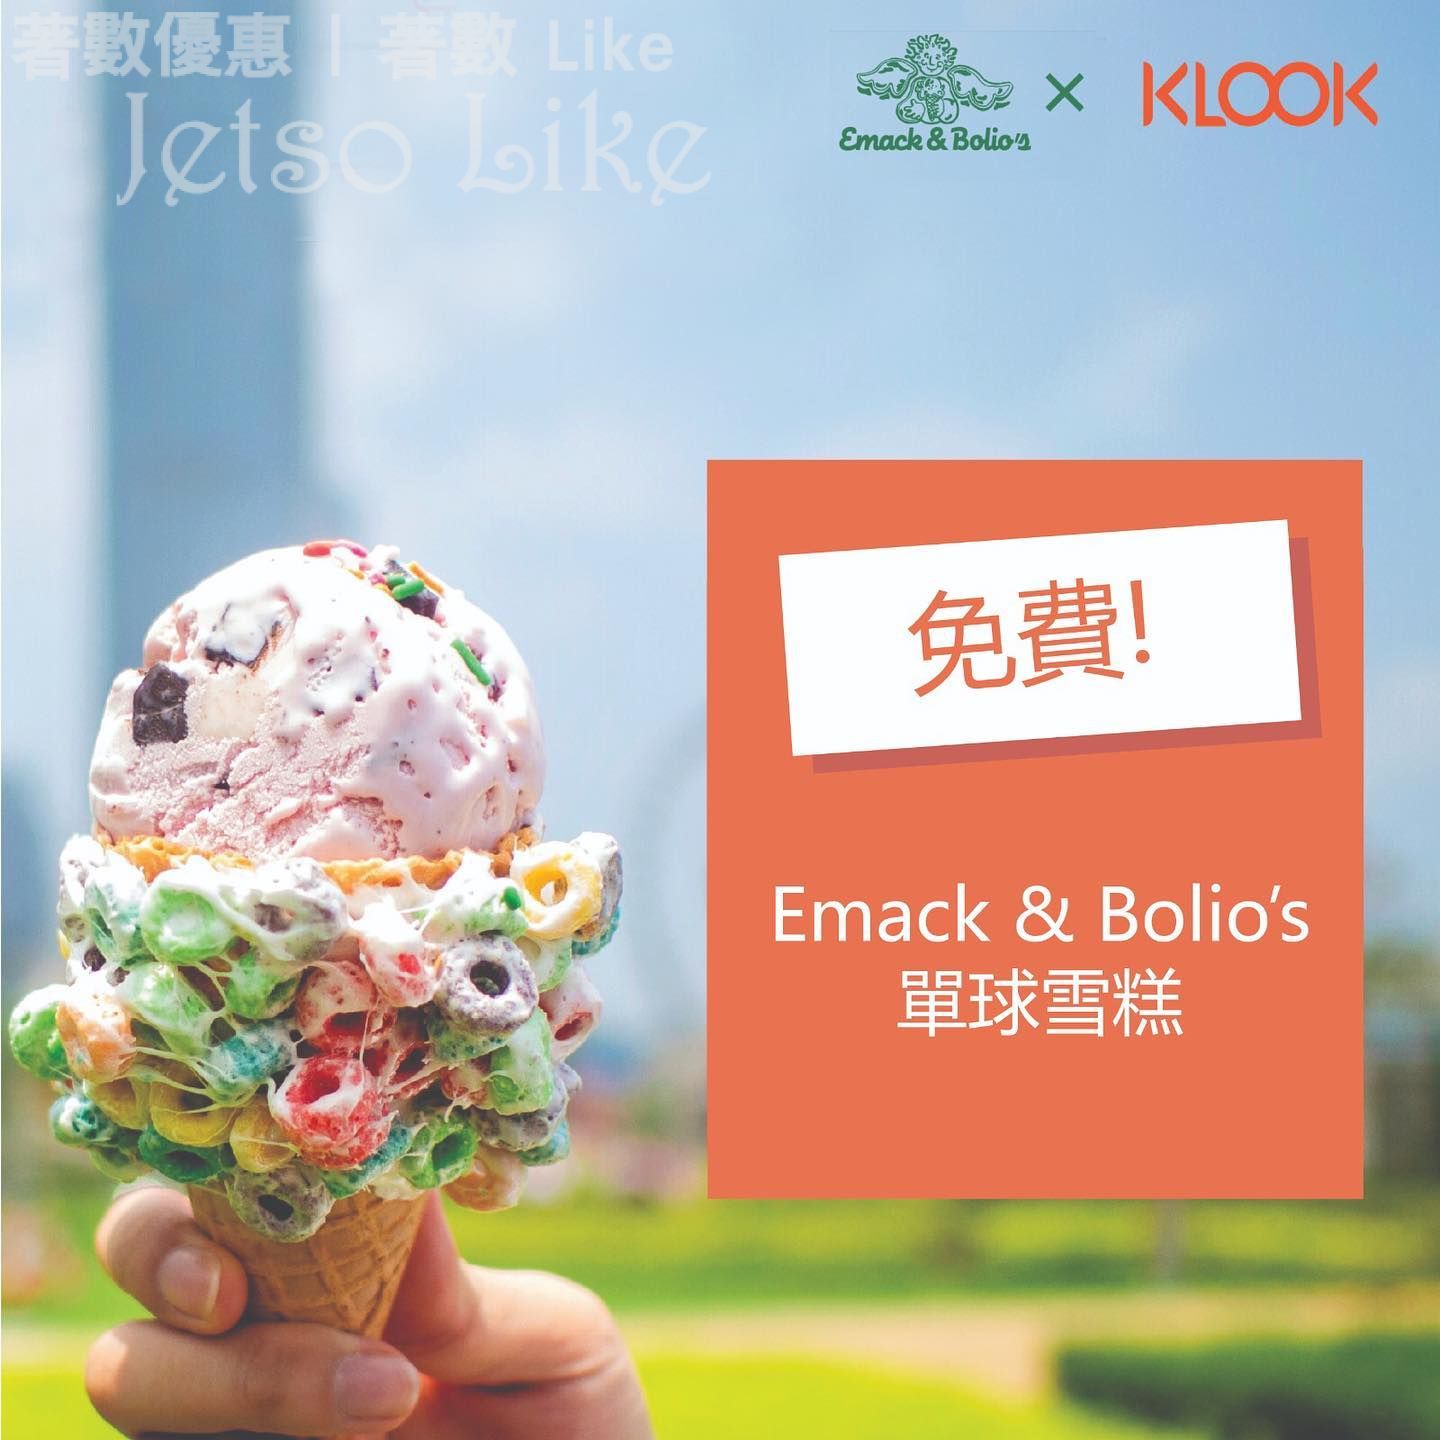 Emack & Bolio’s荃灣店新用户下載 KLOOK app 免費獲取單球雪糕